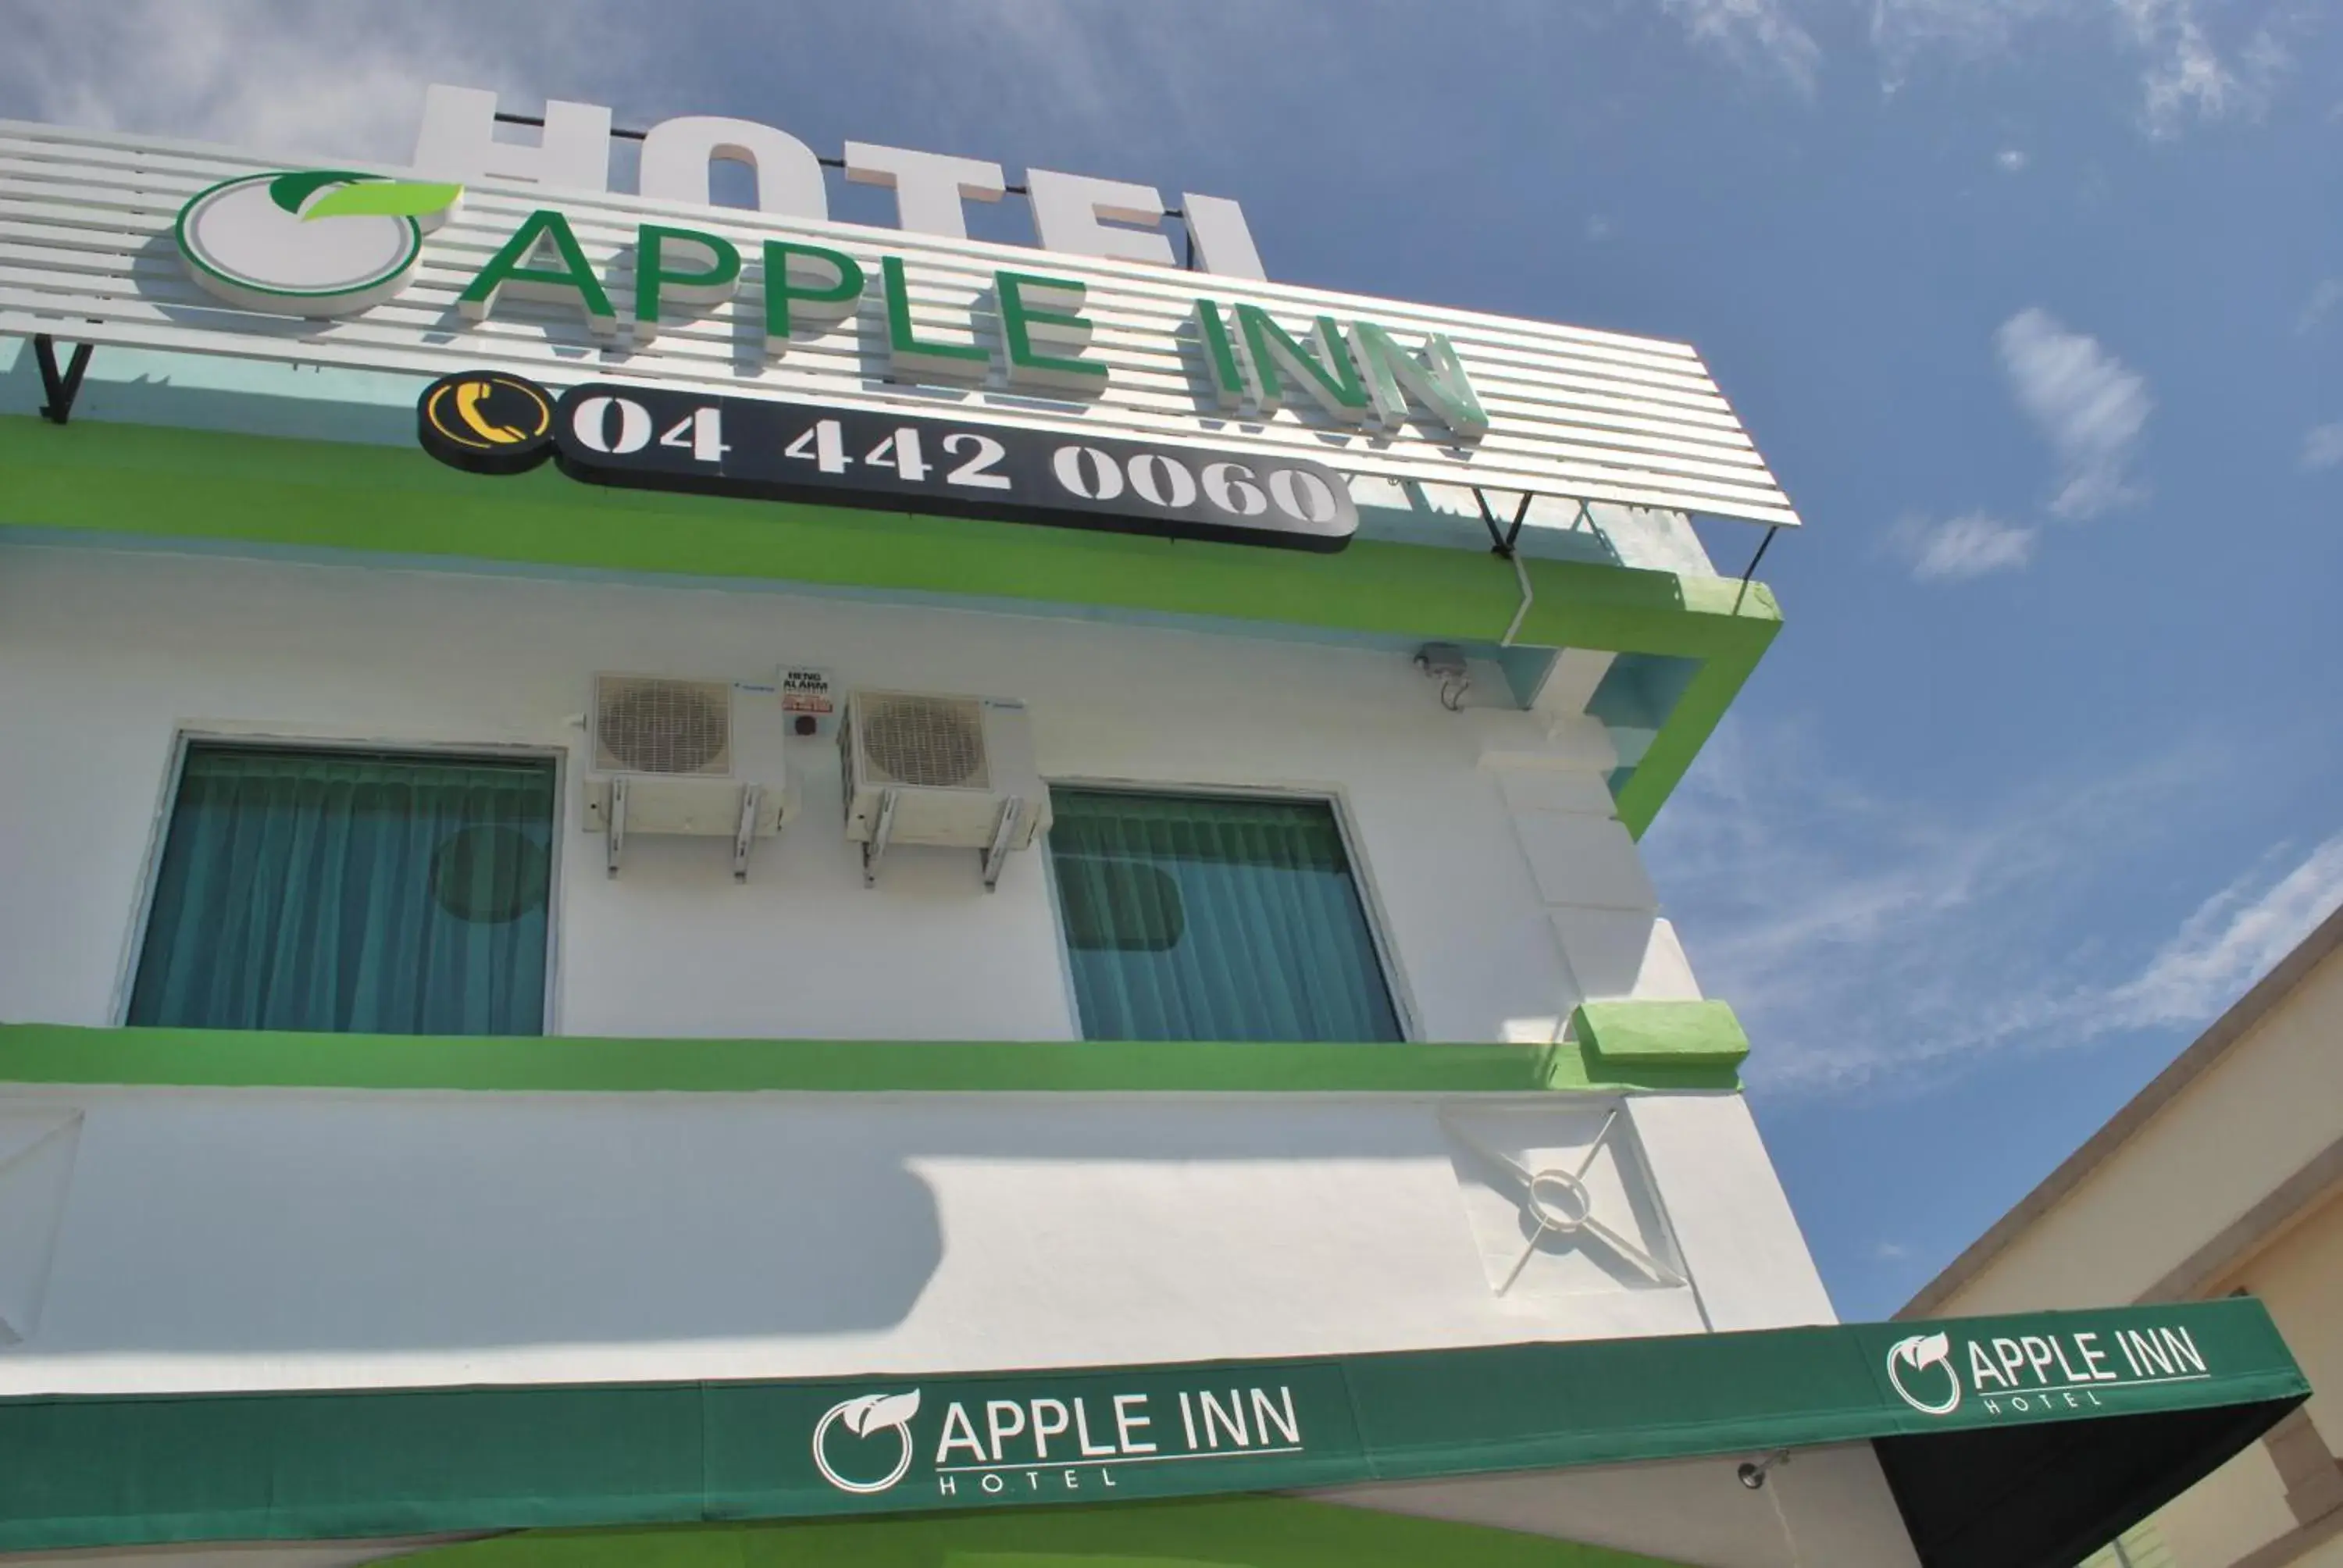 Property logo or sign in Apple Inn Hotel